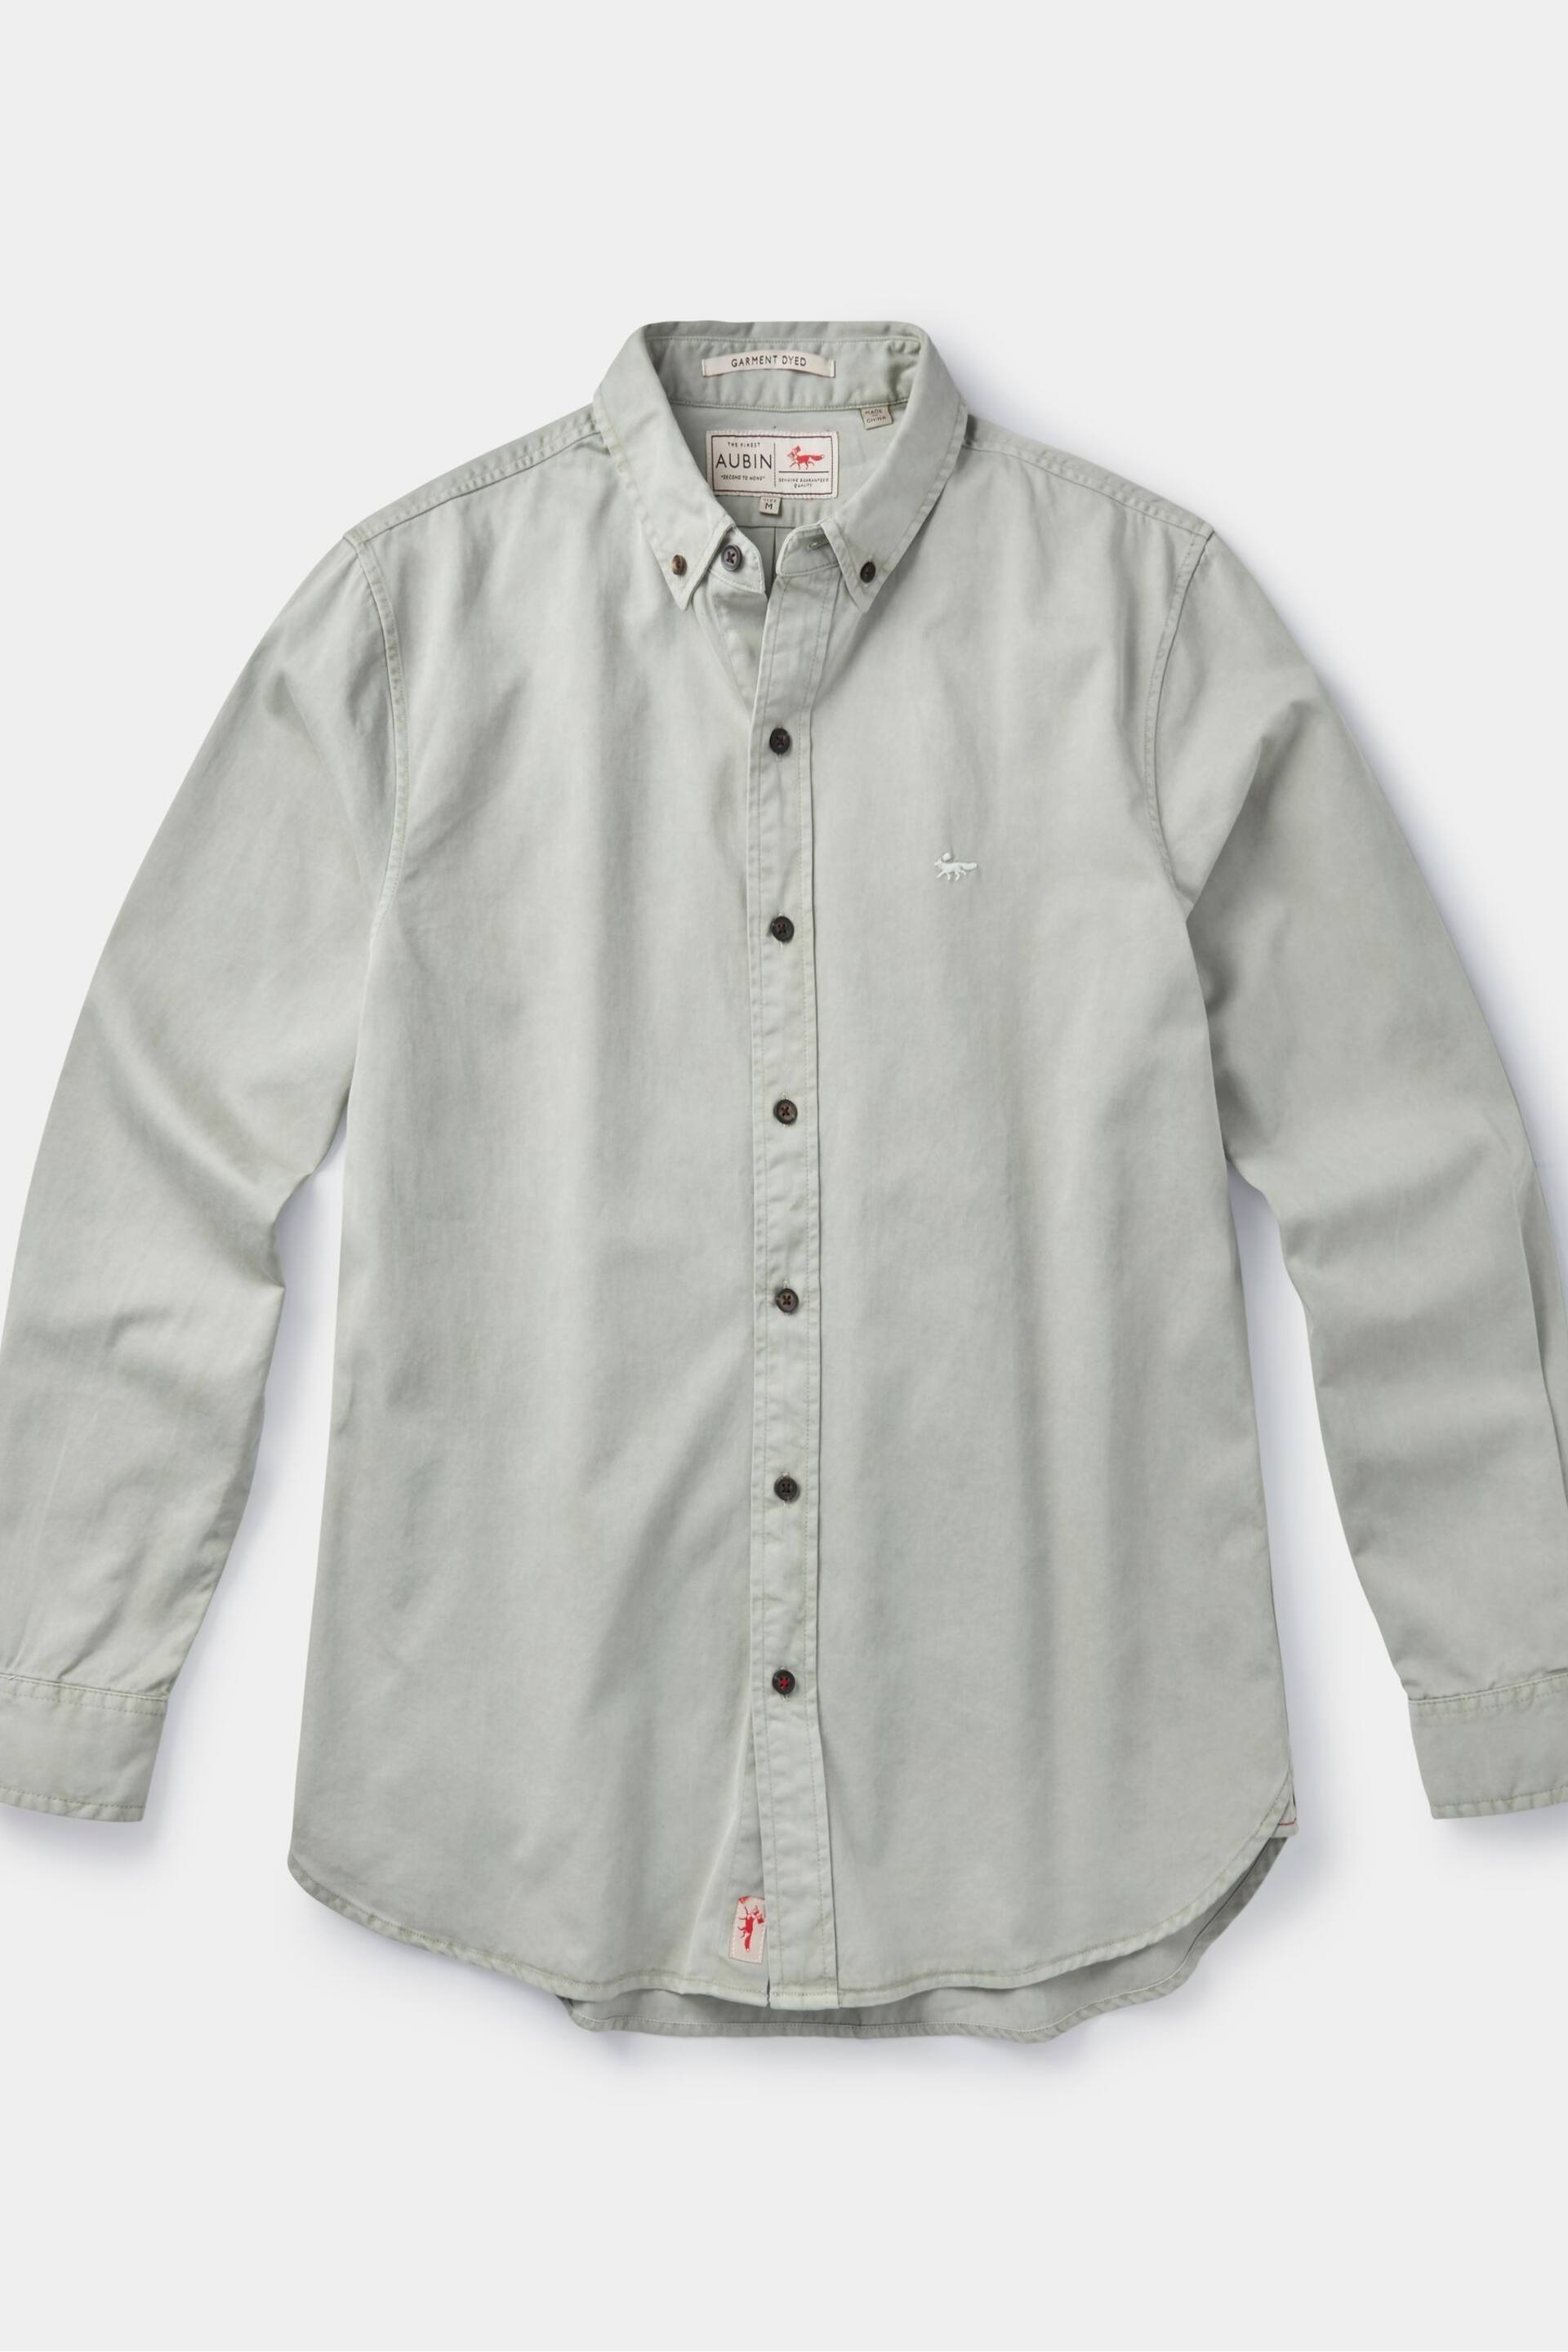 Aubin Hessle Garment Dyed Shirt - Image 7 of 7